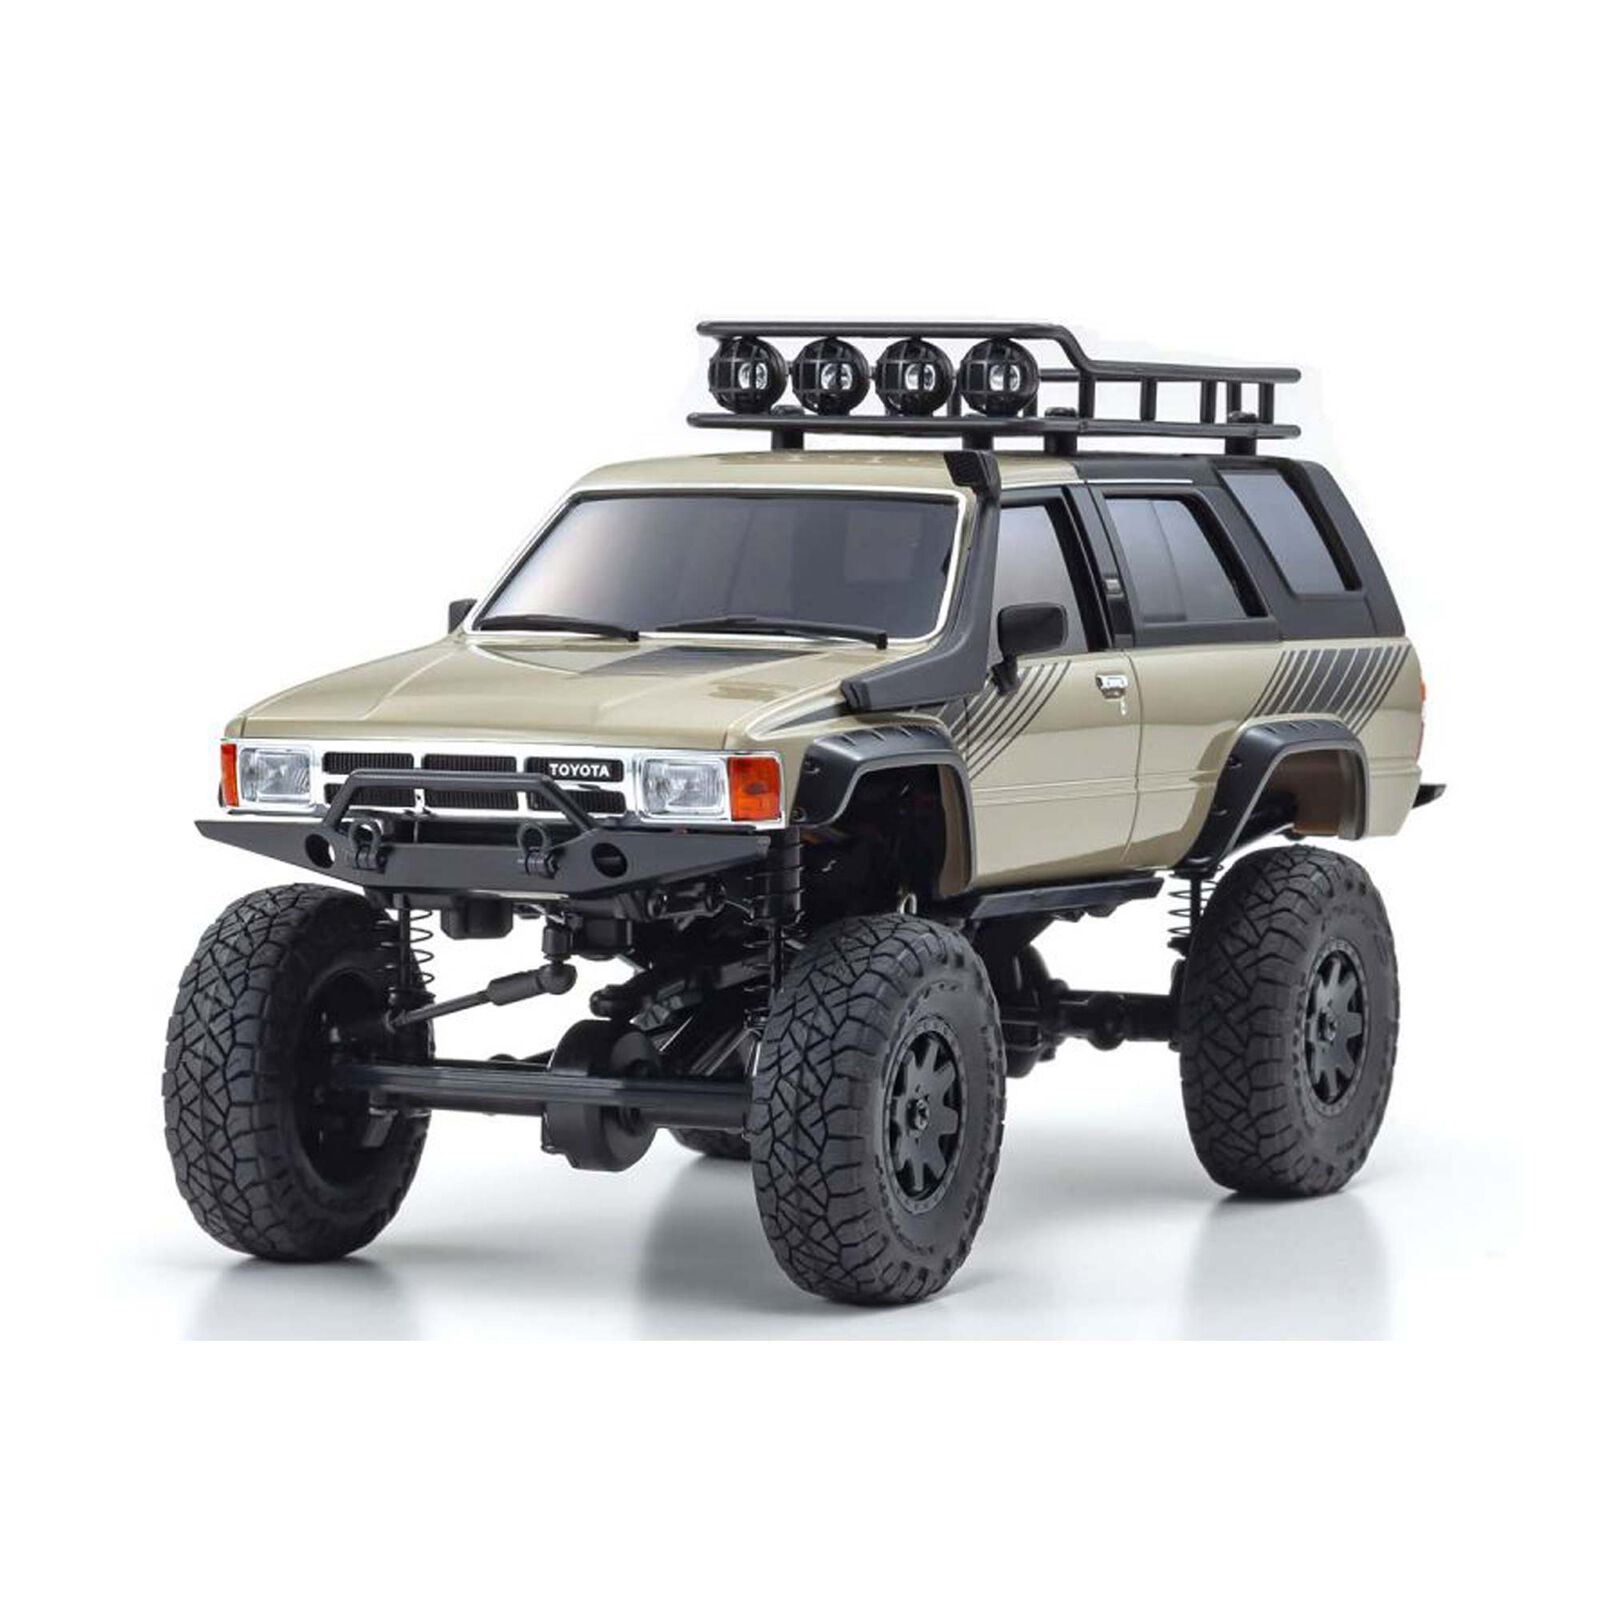 Roof Racks and Light Bars for Kyosho Mini-z 4x4 4-runner Jimny Jeep Crawlers